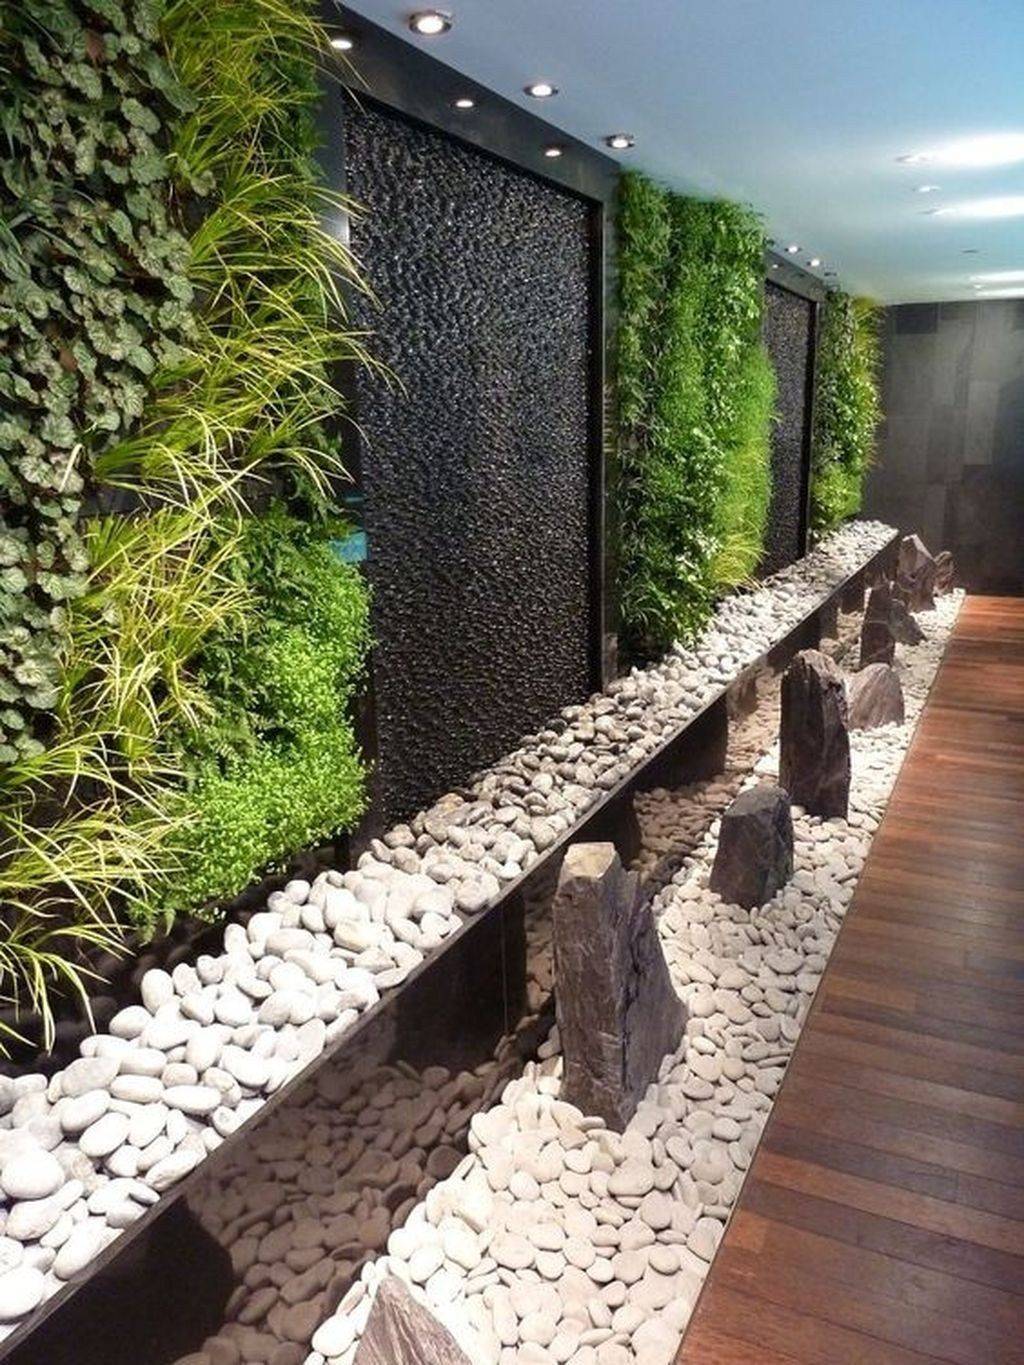 Green Walls Khd Landscape Engineering Solutions Garden